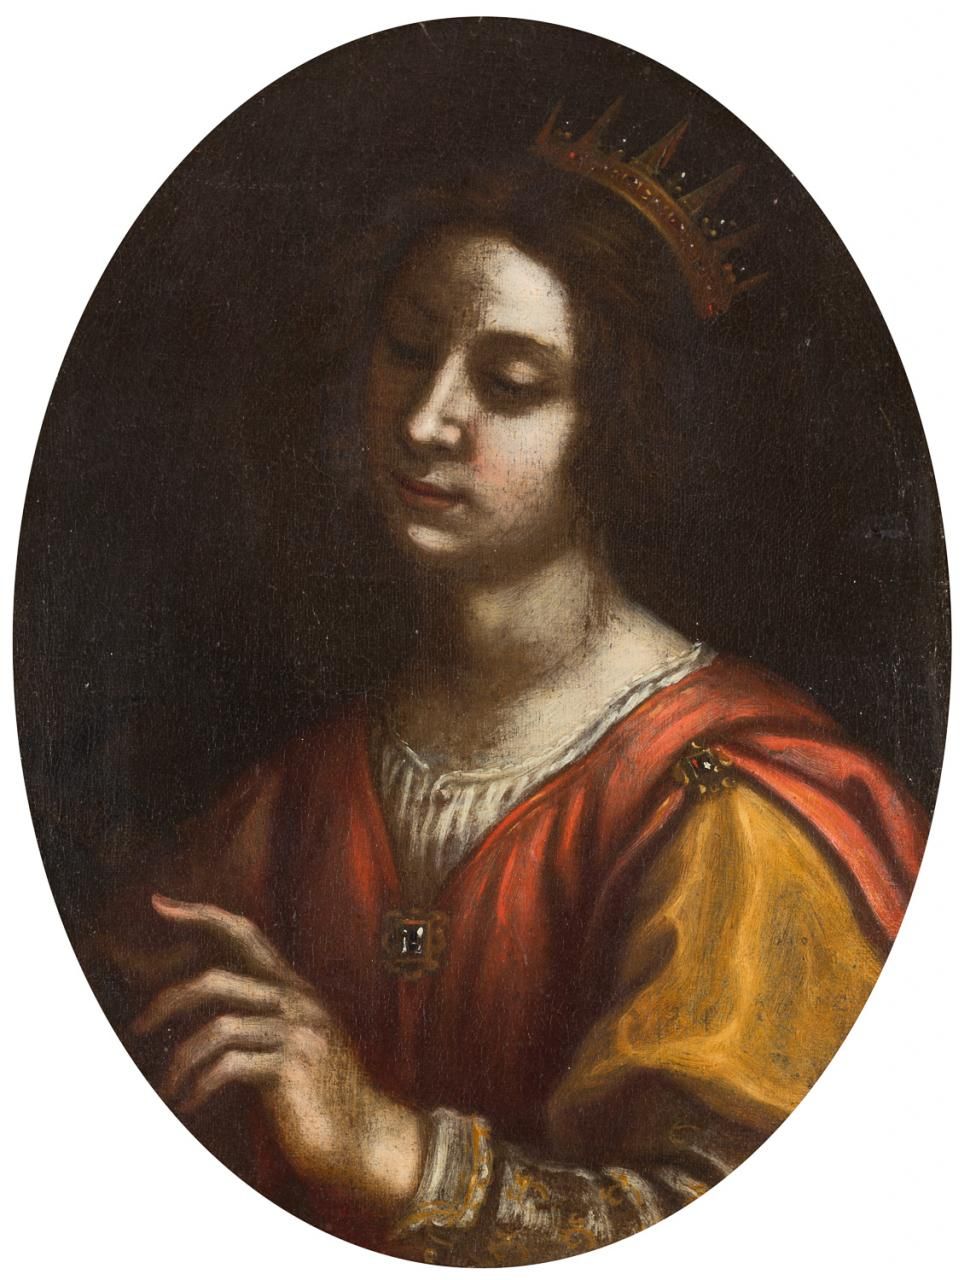 ESCUELA ESPAÑOLA S. XVII St. Catherine of Alexandria
Oil on canvas
54 x 41 cm